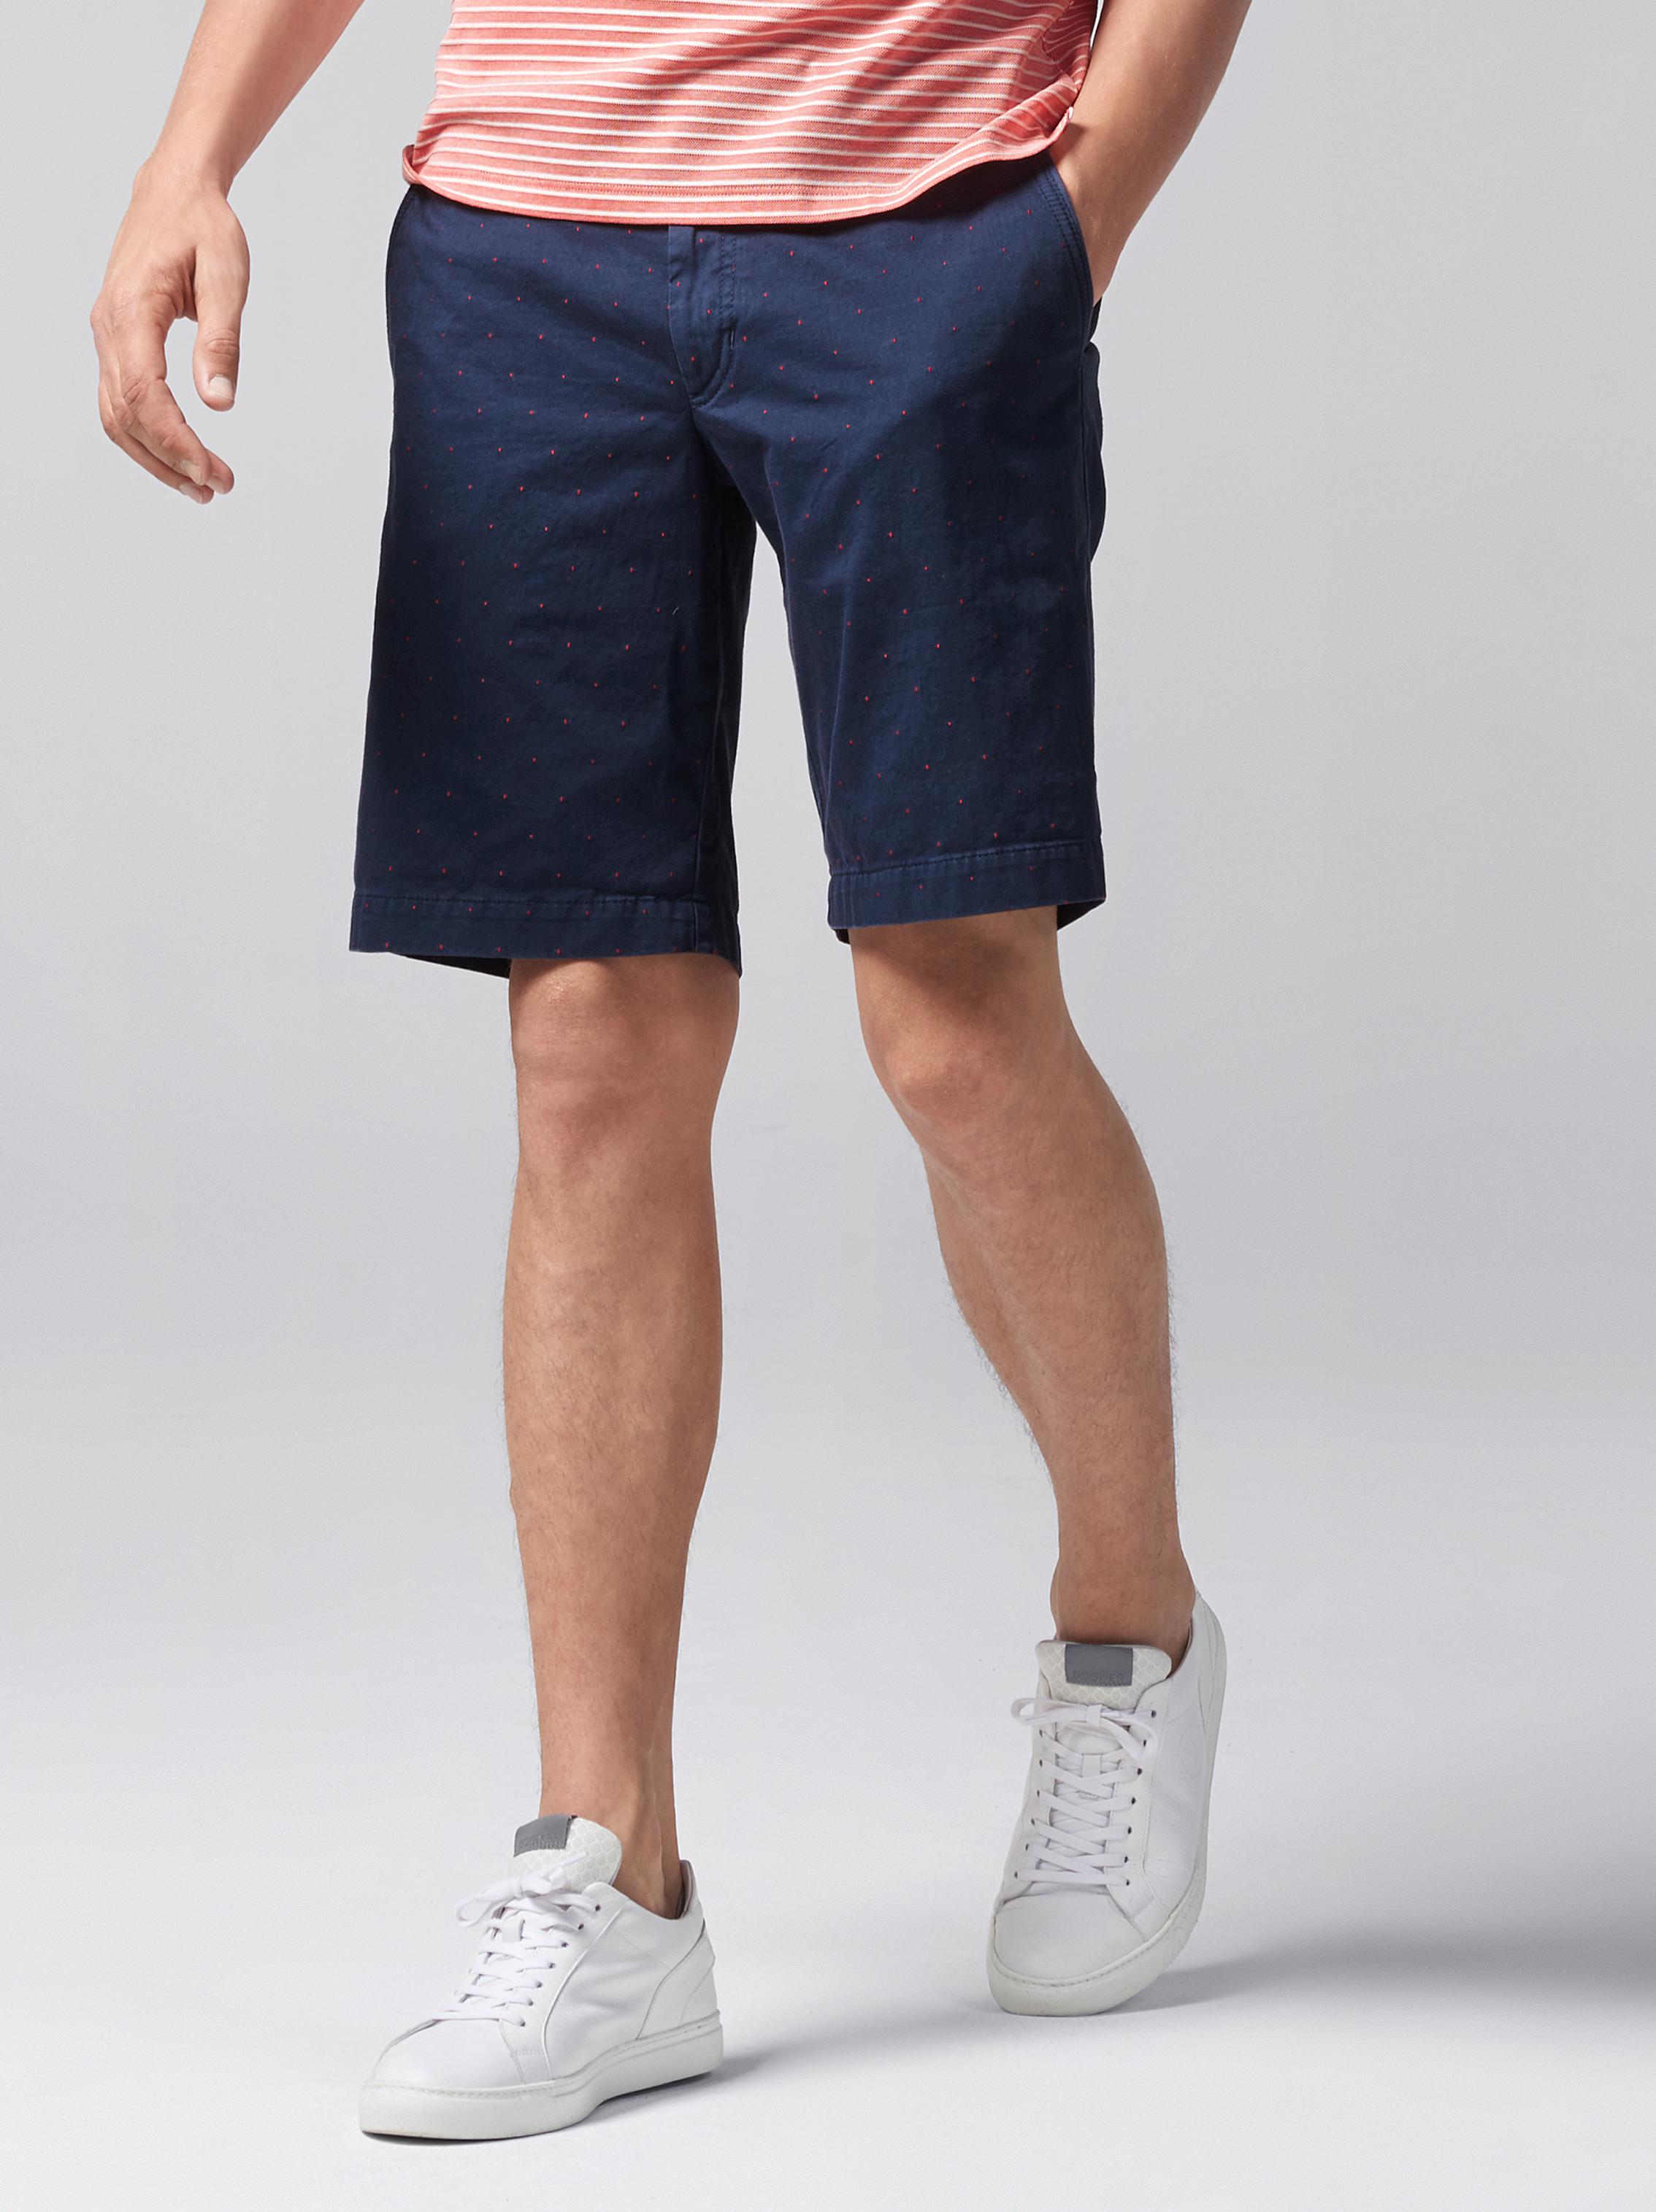 Bogner Cotton Shorts Jery-g in Blue for Men - Lyst